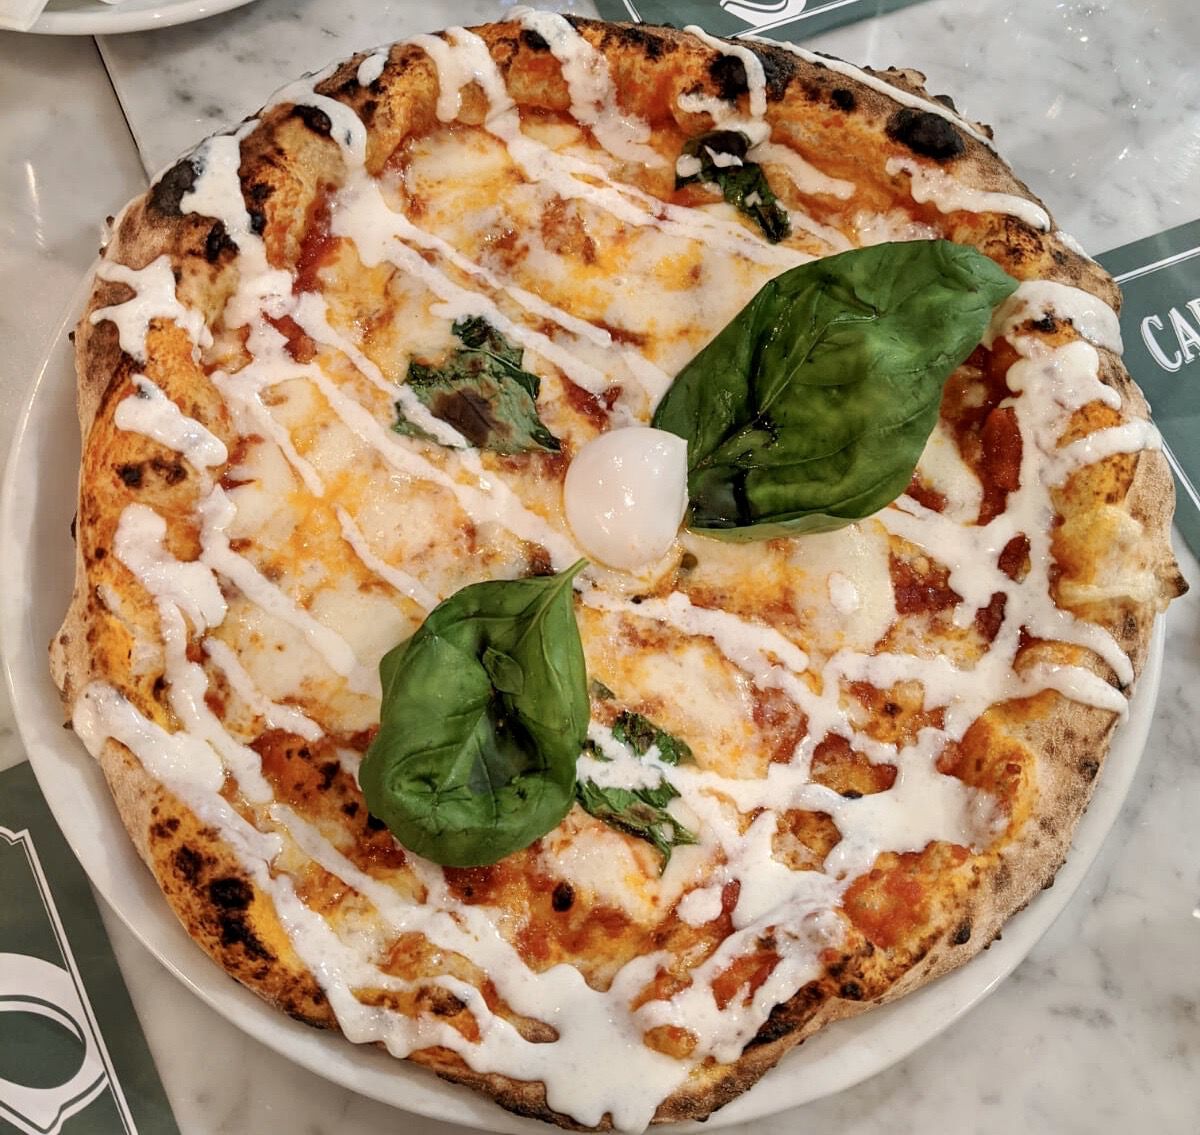 Amatriciana - Capuano's Pizzeria 7.0